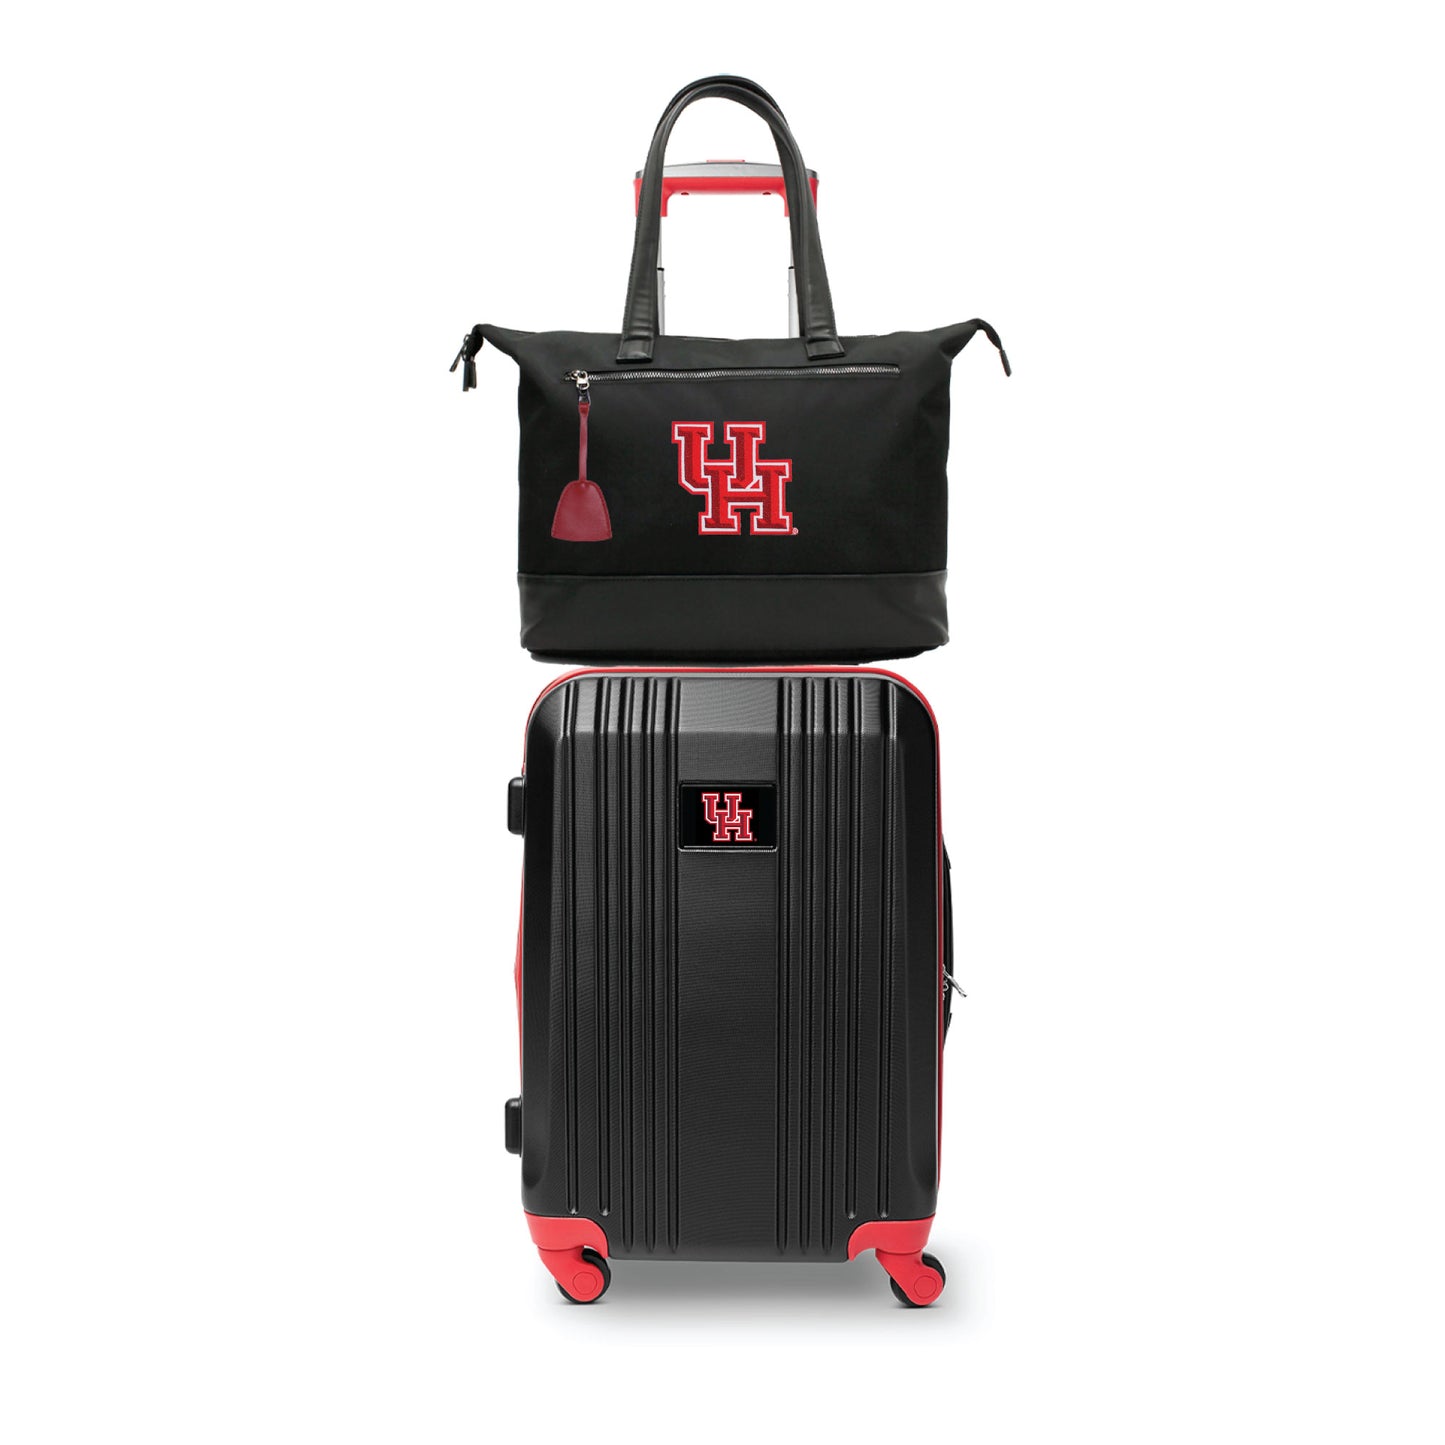 Houston Cougars Premium Laptop Tote Bag and Luggage Set